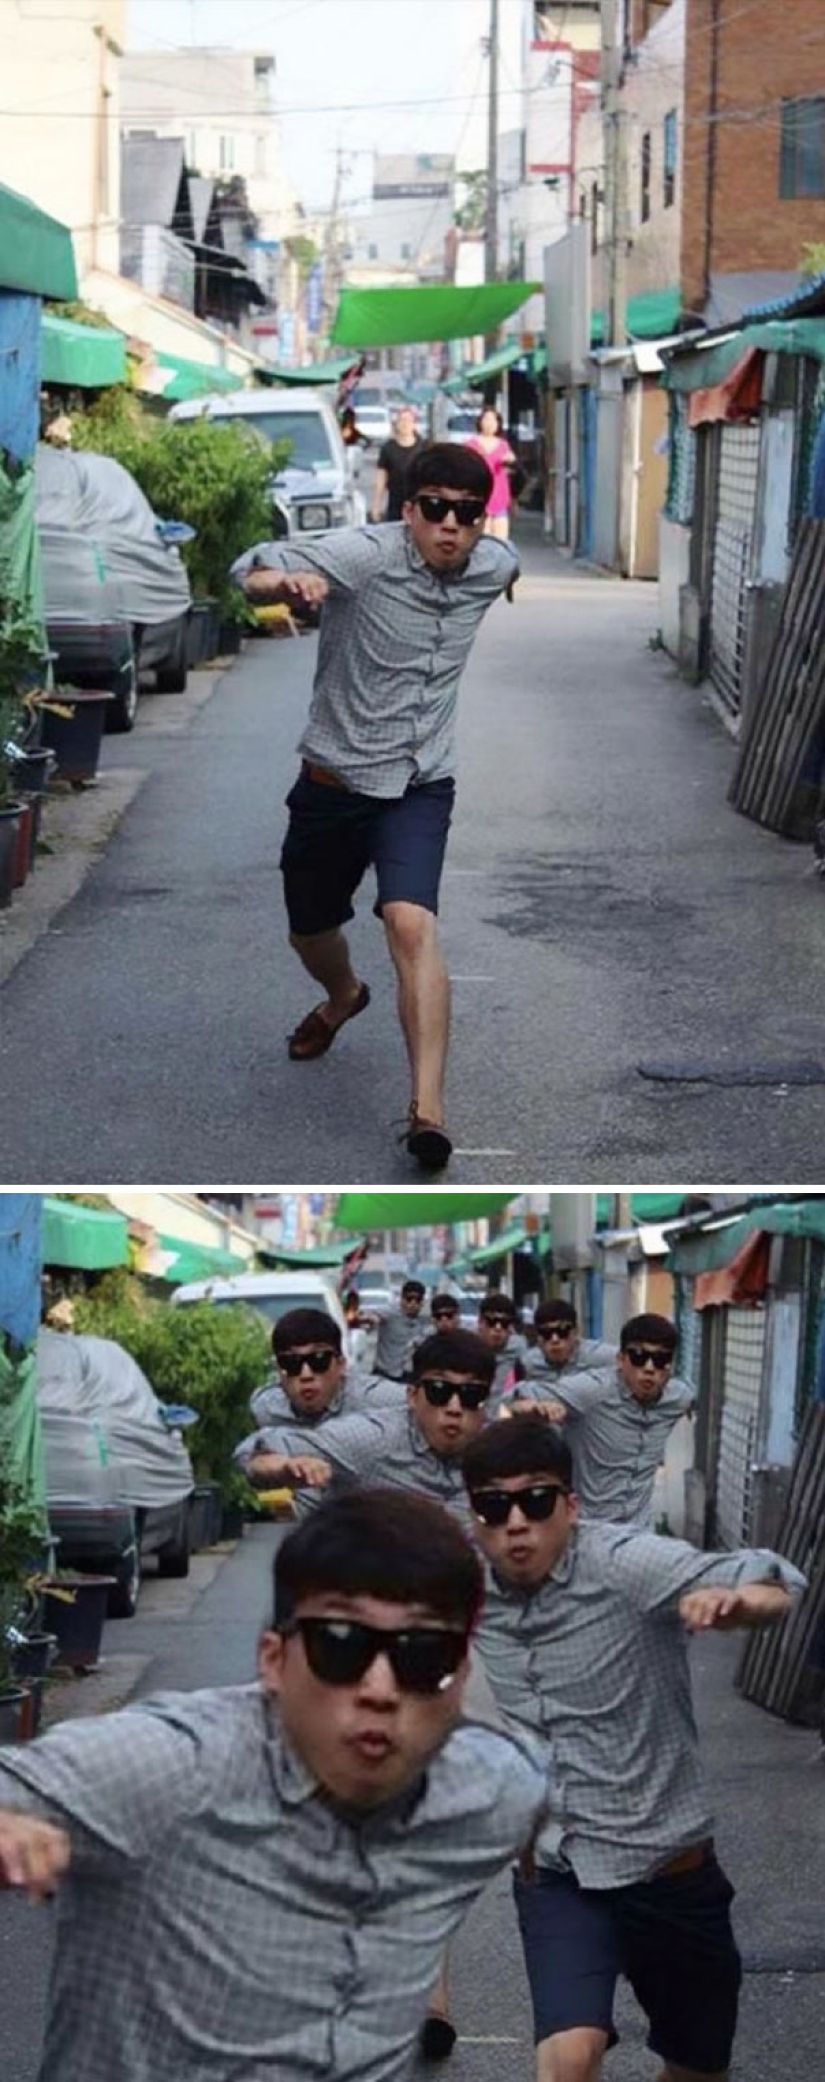 Korean Photoshop trolls are even more insidious than Europeans